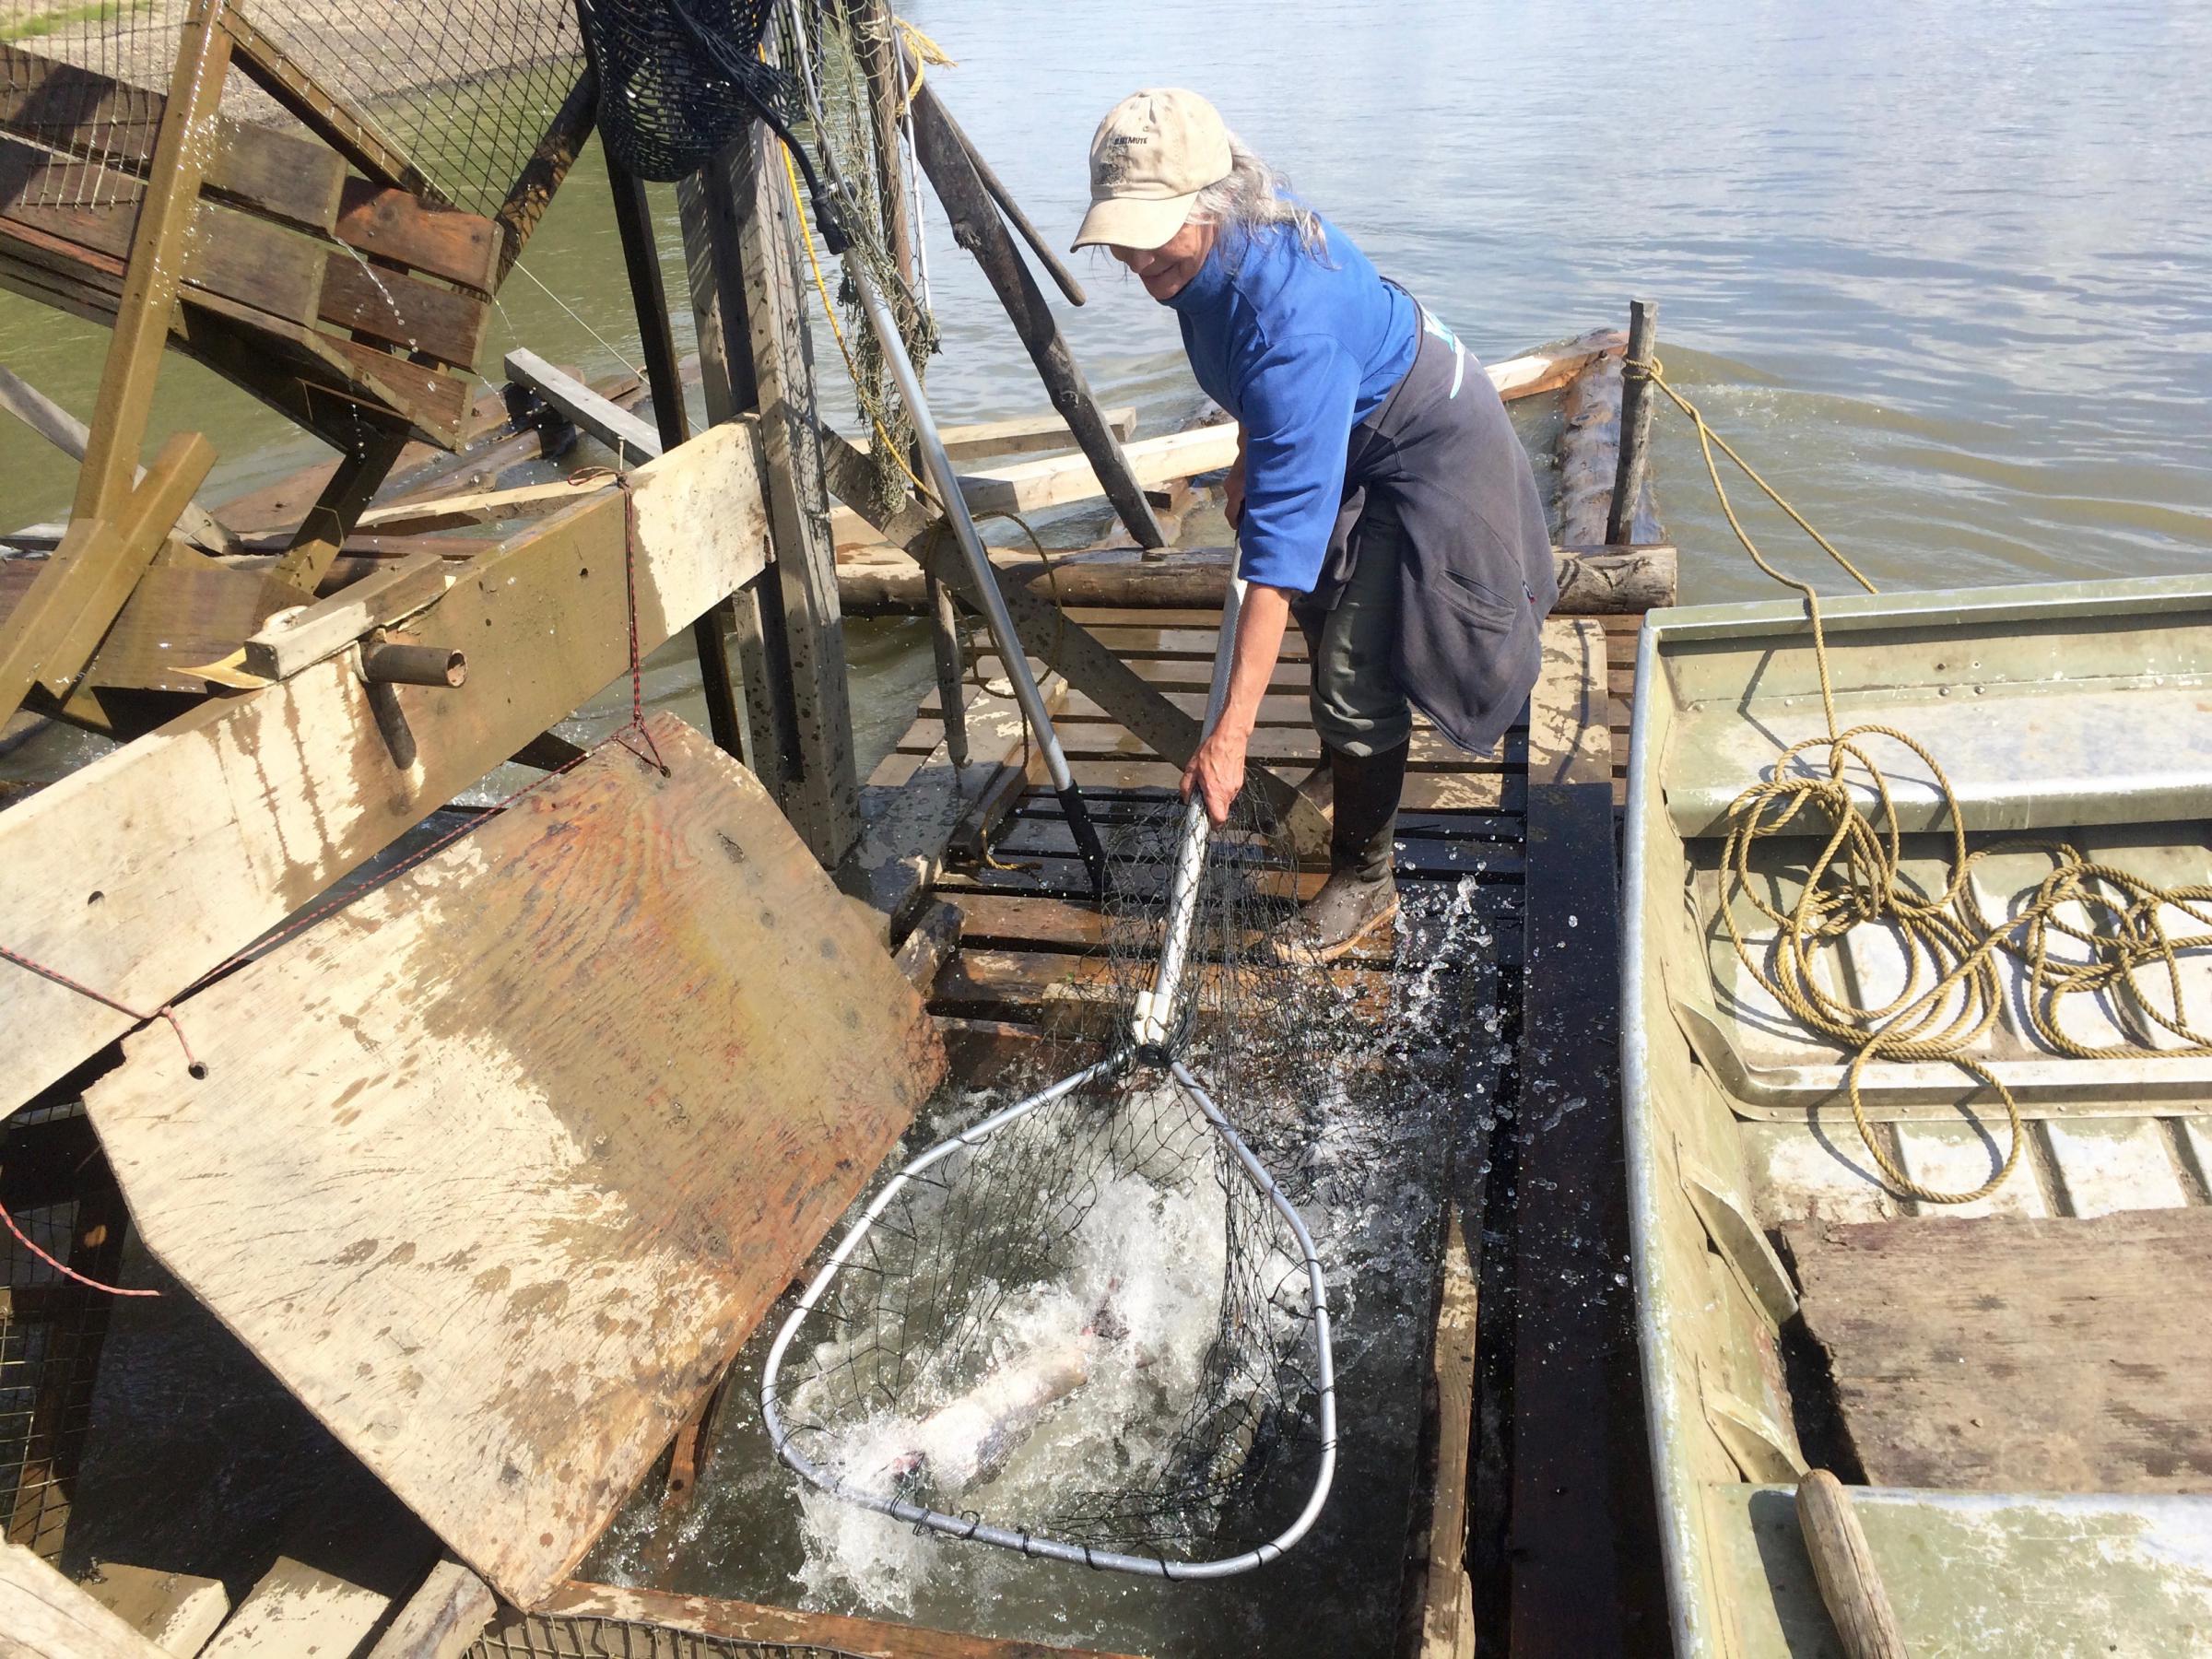 Barb Carlson pulls fish from the live box of her fish wheel near Sleetmute. (Photo by Anna Rose MacArthur/KYUK)